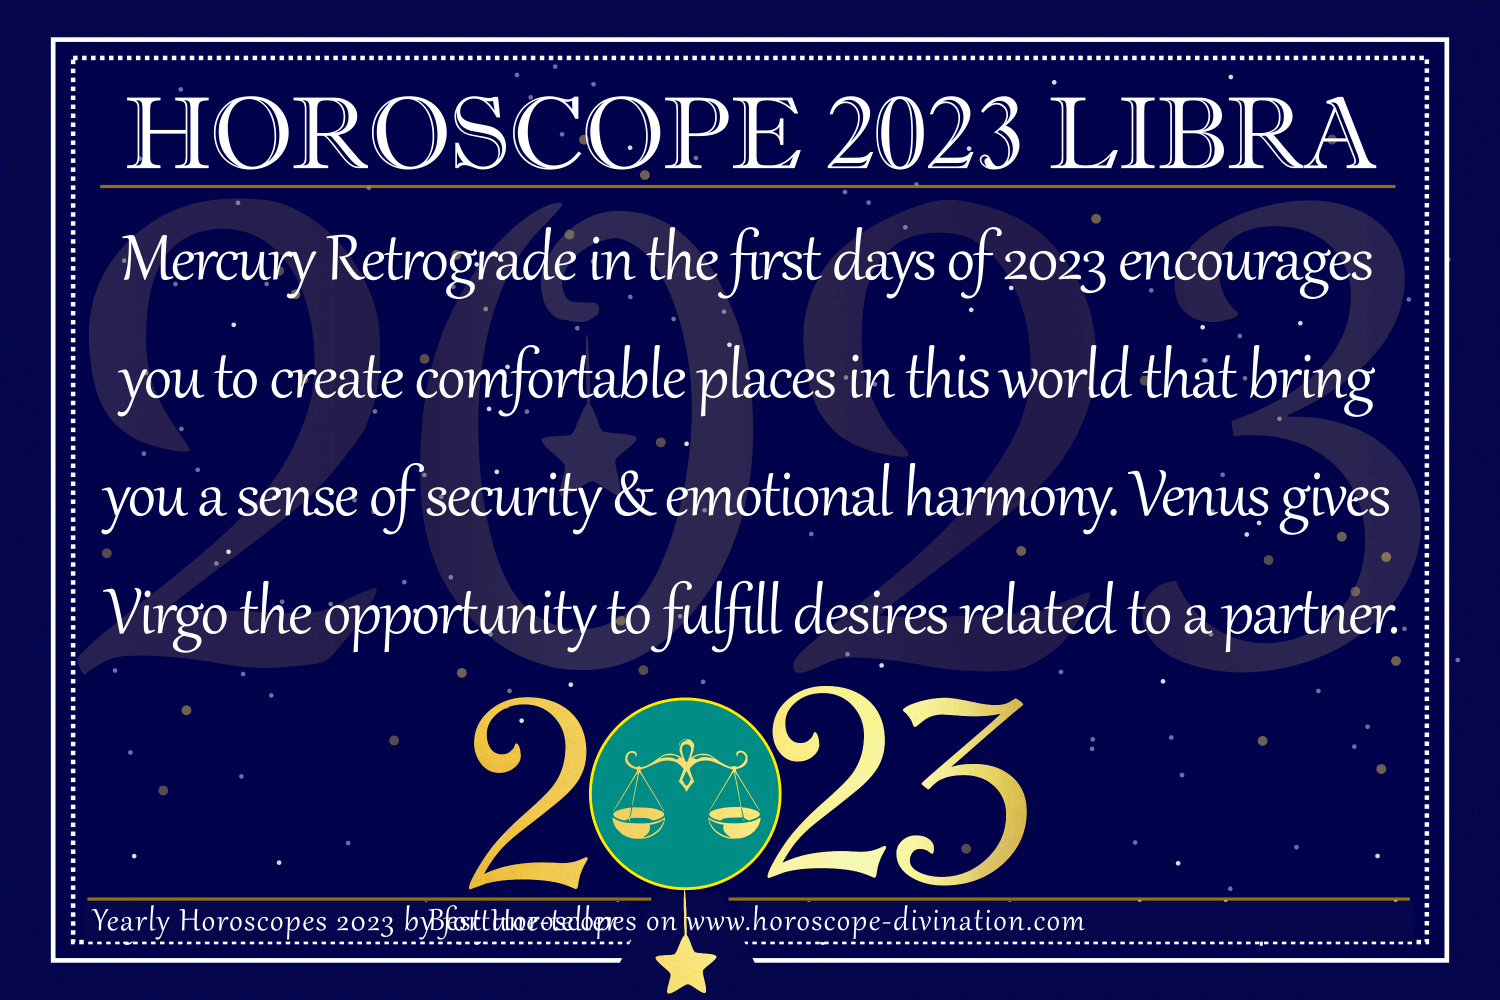 Horoscope 2023 Libra Yearly Forecast & Future